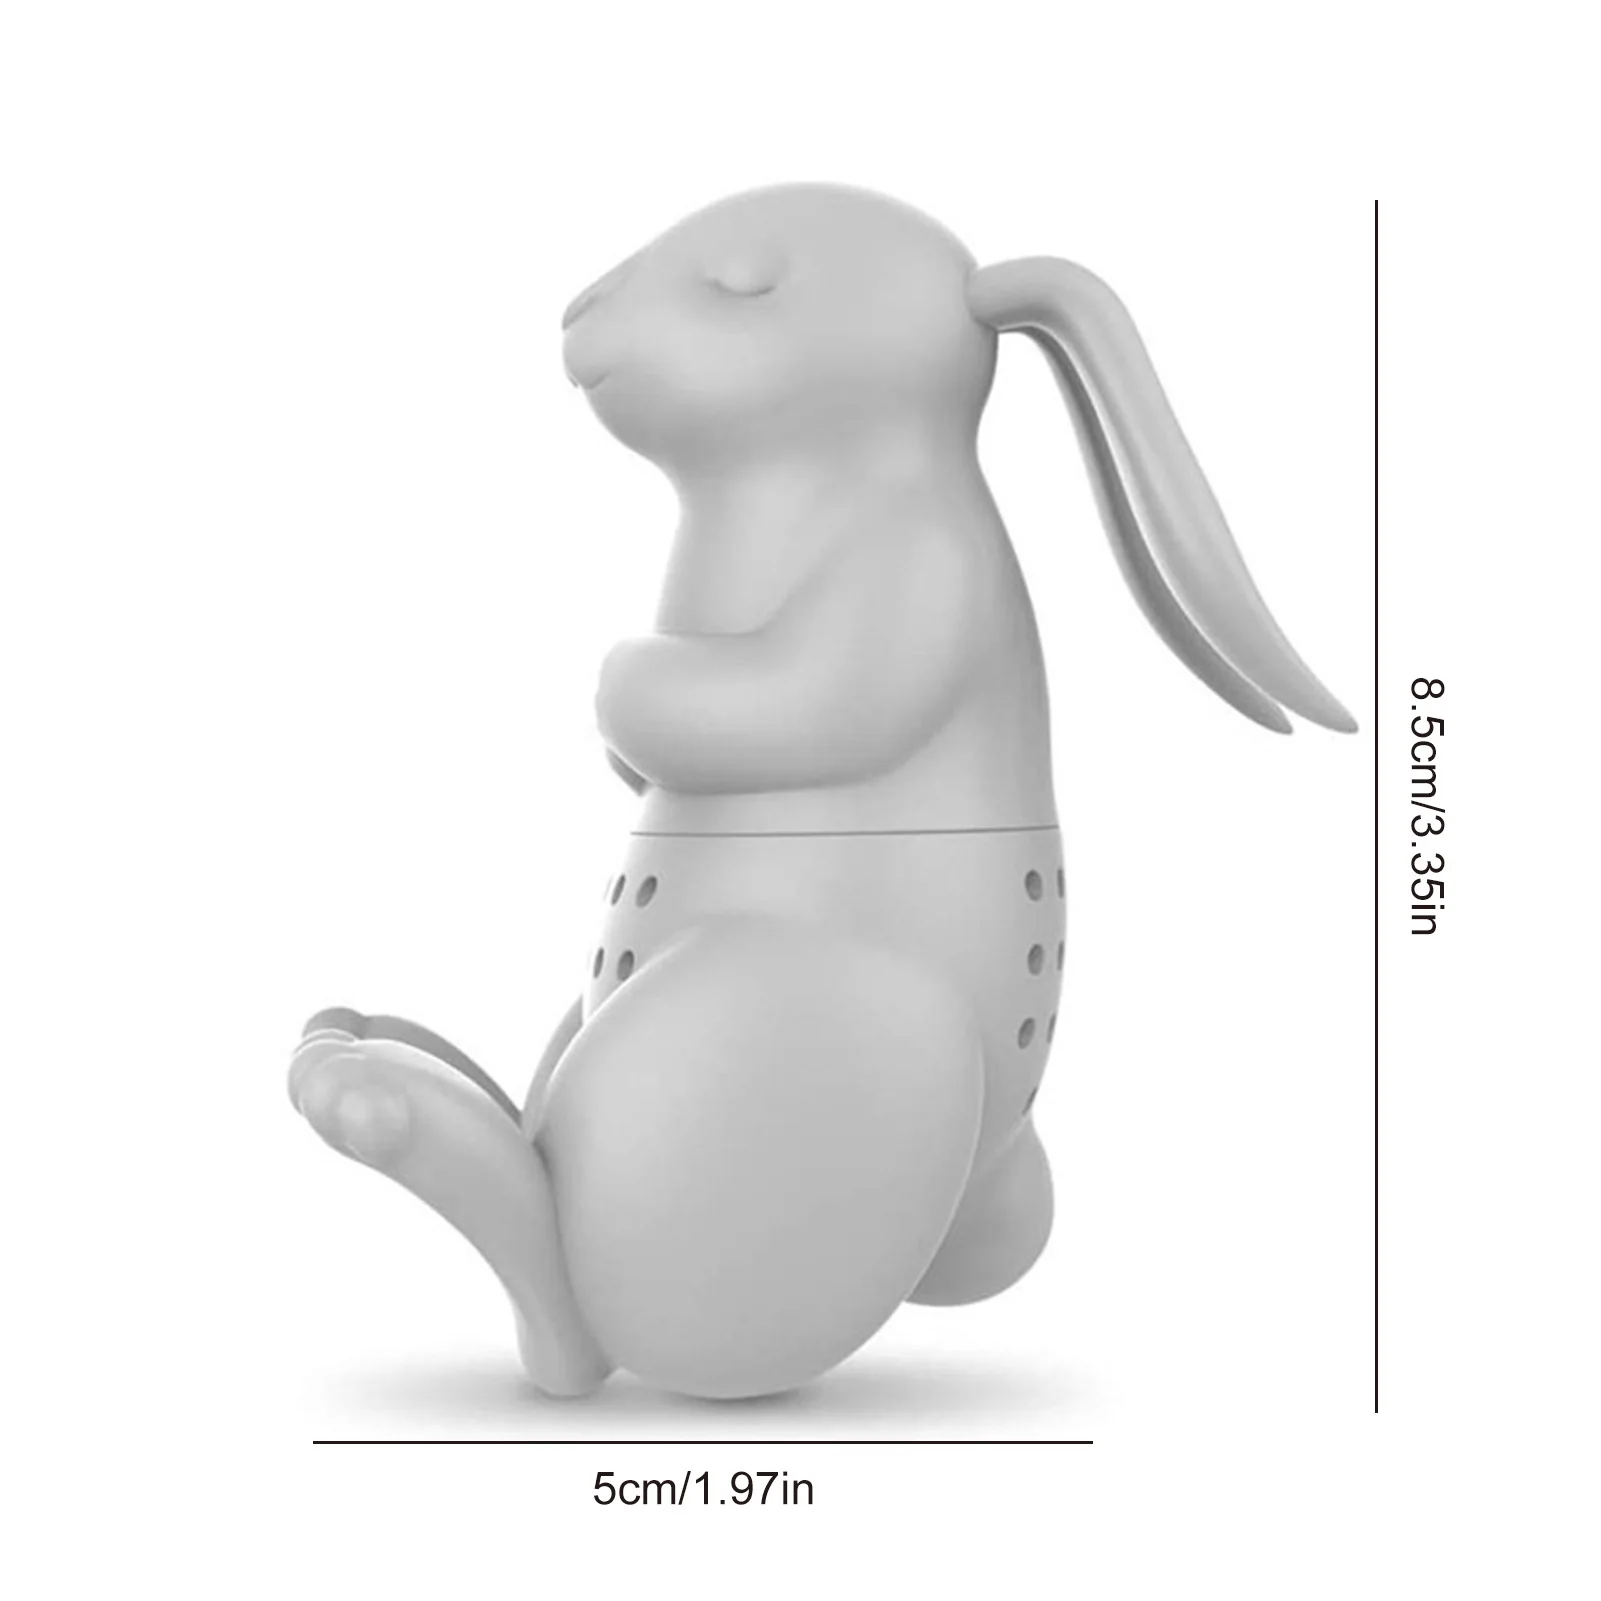 Cute Rabbit Silicone Tea Infuser Filter Bunny Tea Maker Puer Tea Herb Tea Strainer Tools Accessories Gift images - 6